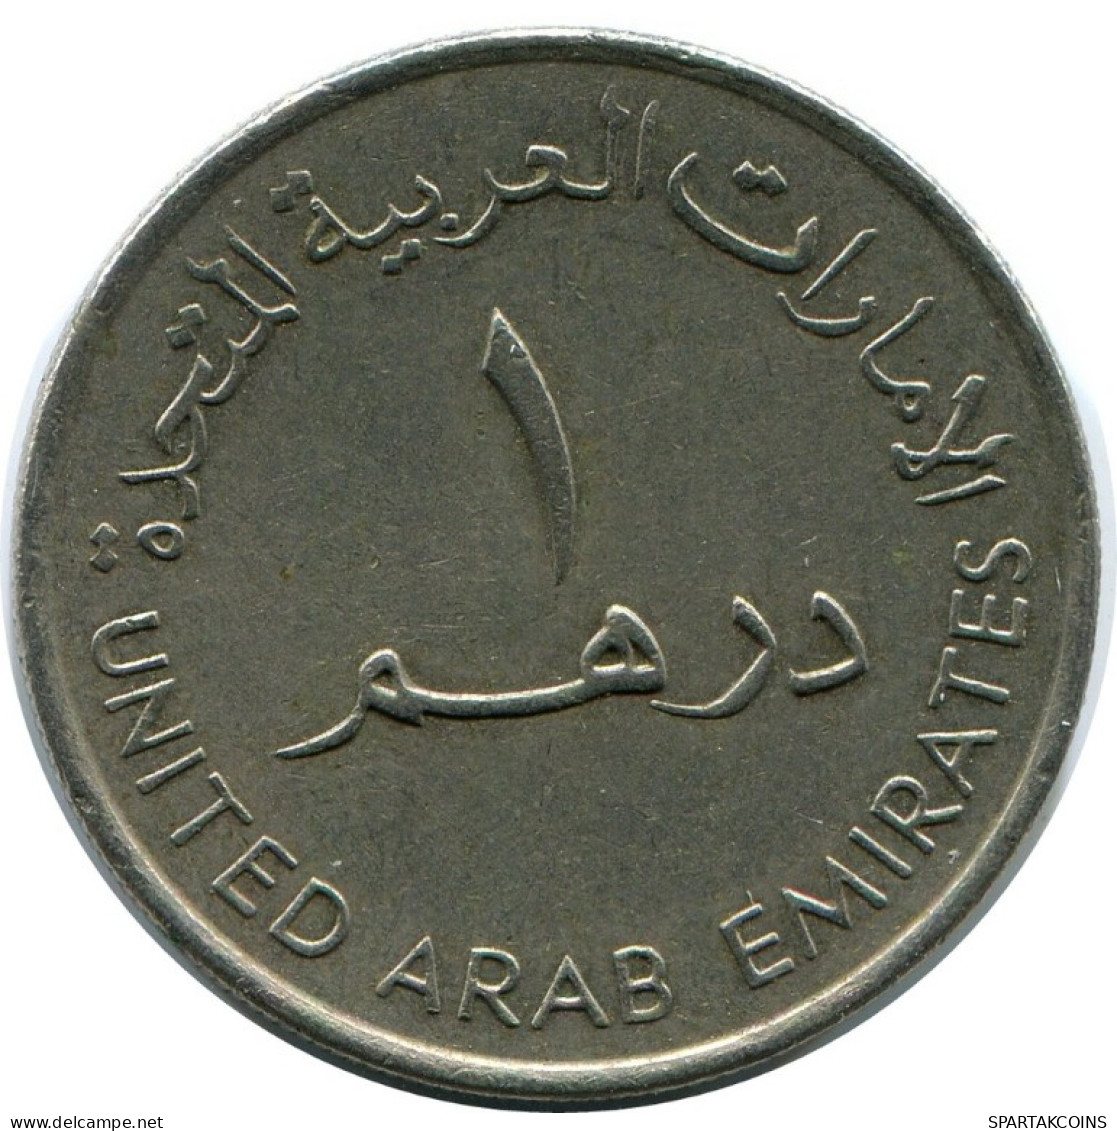 1 DIRHAM 1995 UAE UNITED ARAB EMIRATES Islámico Moneda #AK160.E.A - Ver. Arab. Emirate